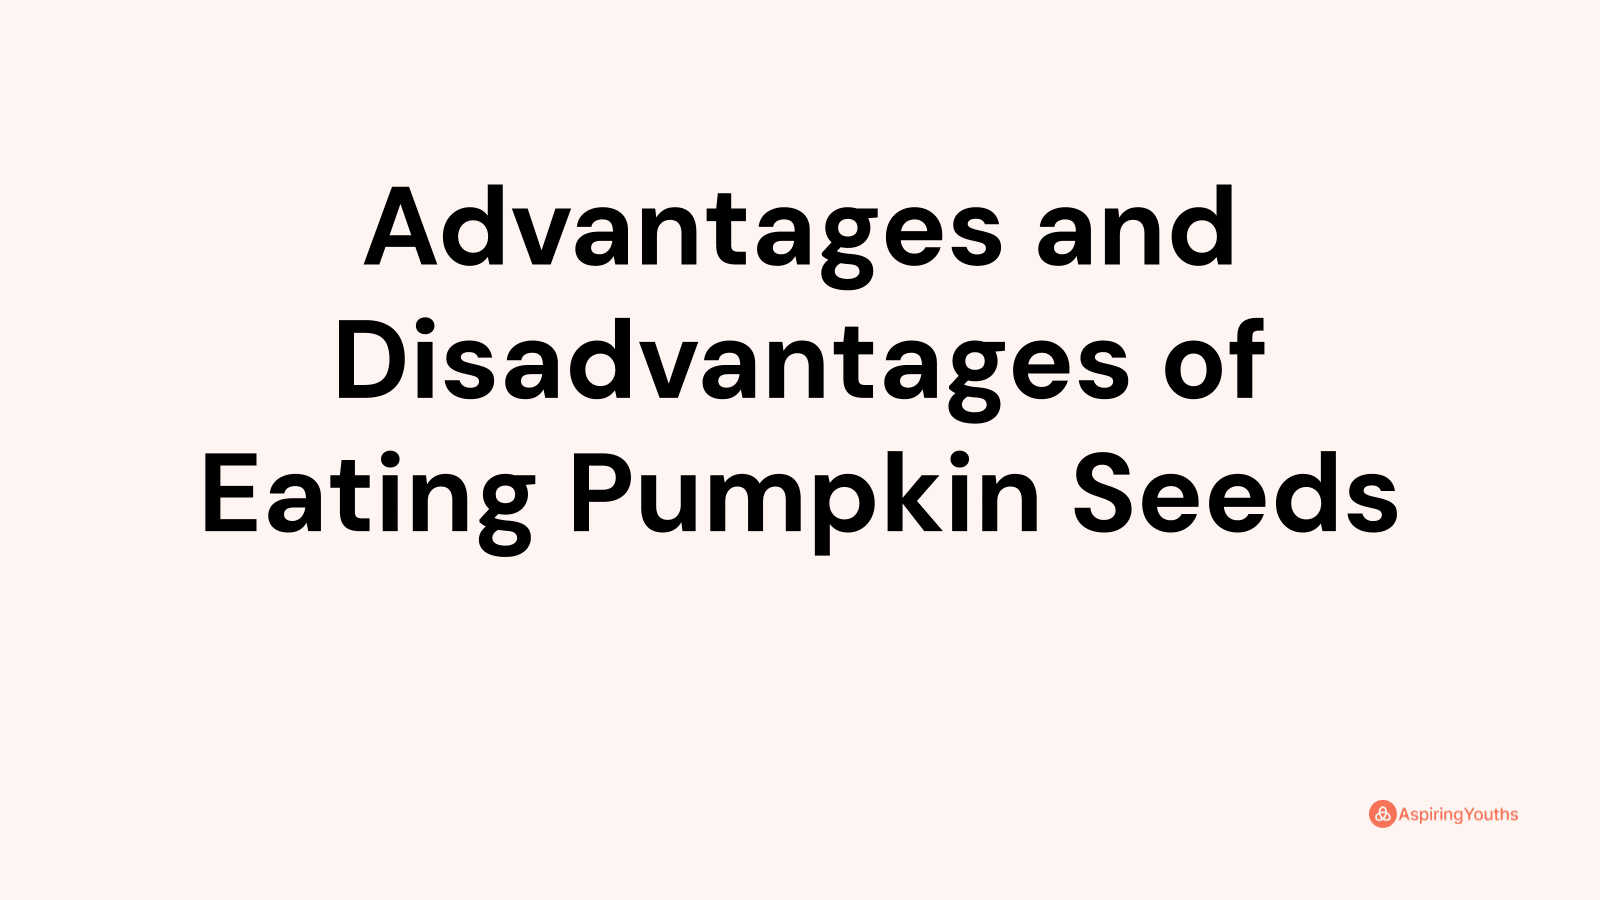 Advantages and disadvantages of Eating Pumpkin Seeds